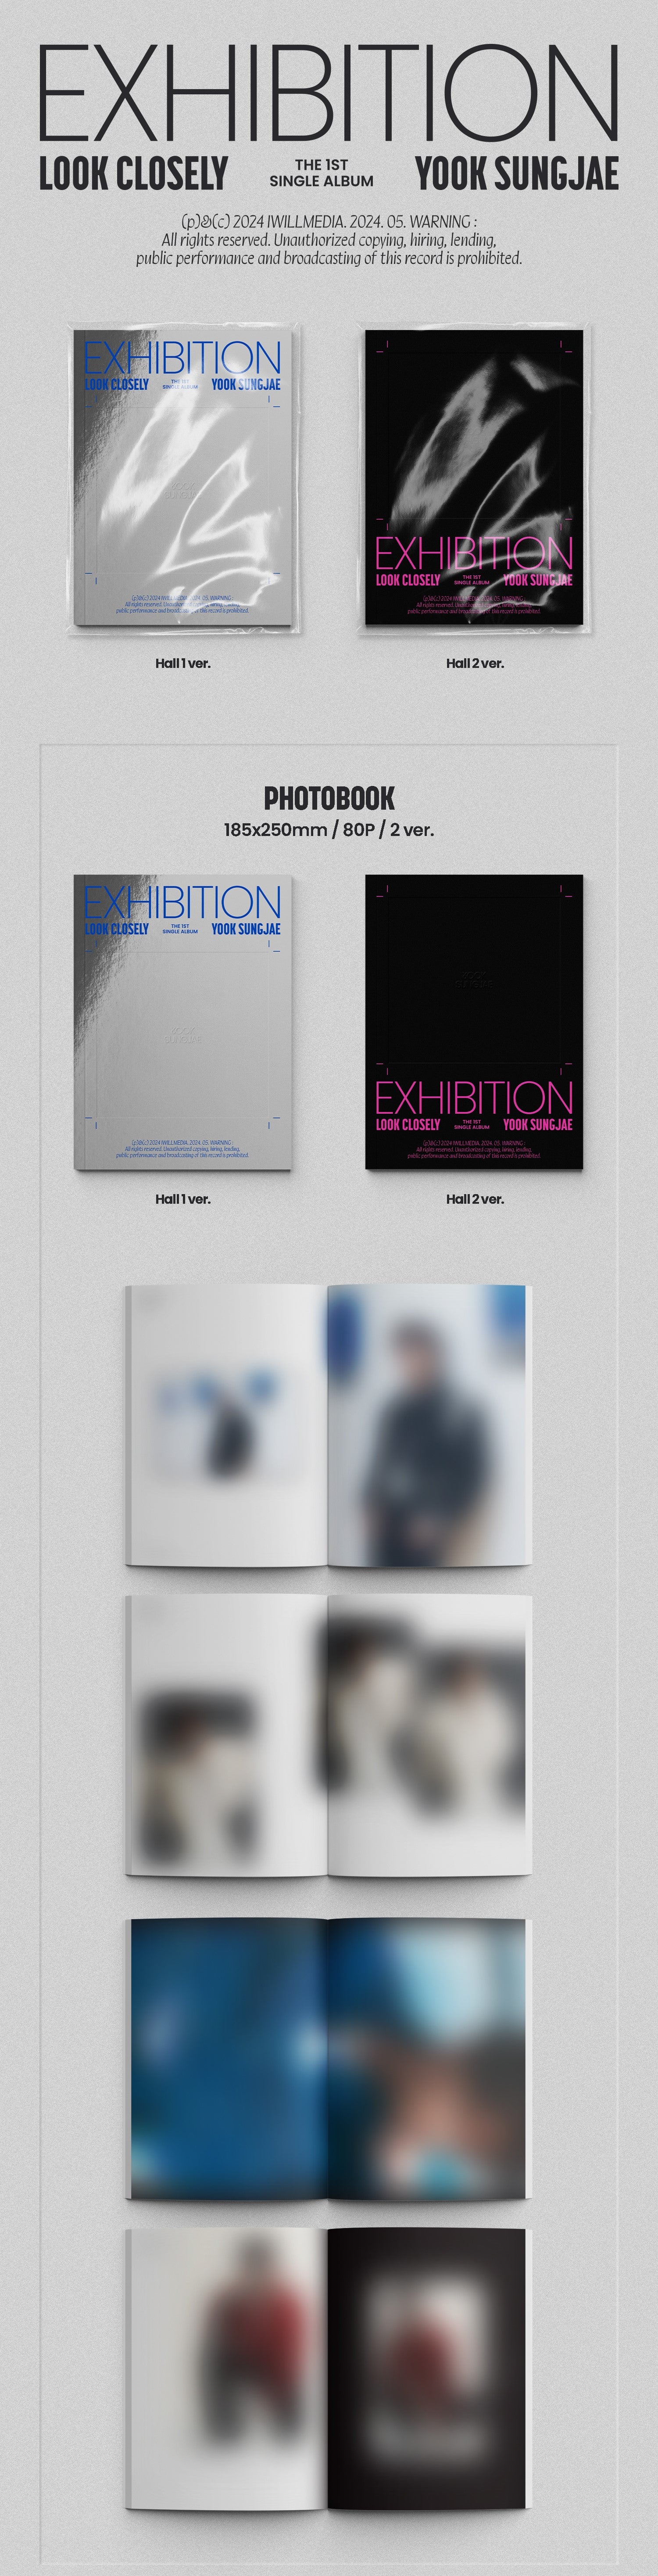 jstoreonline-yook-sungjae-1st-single-album-exhibition-look-closely